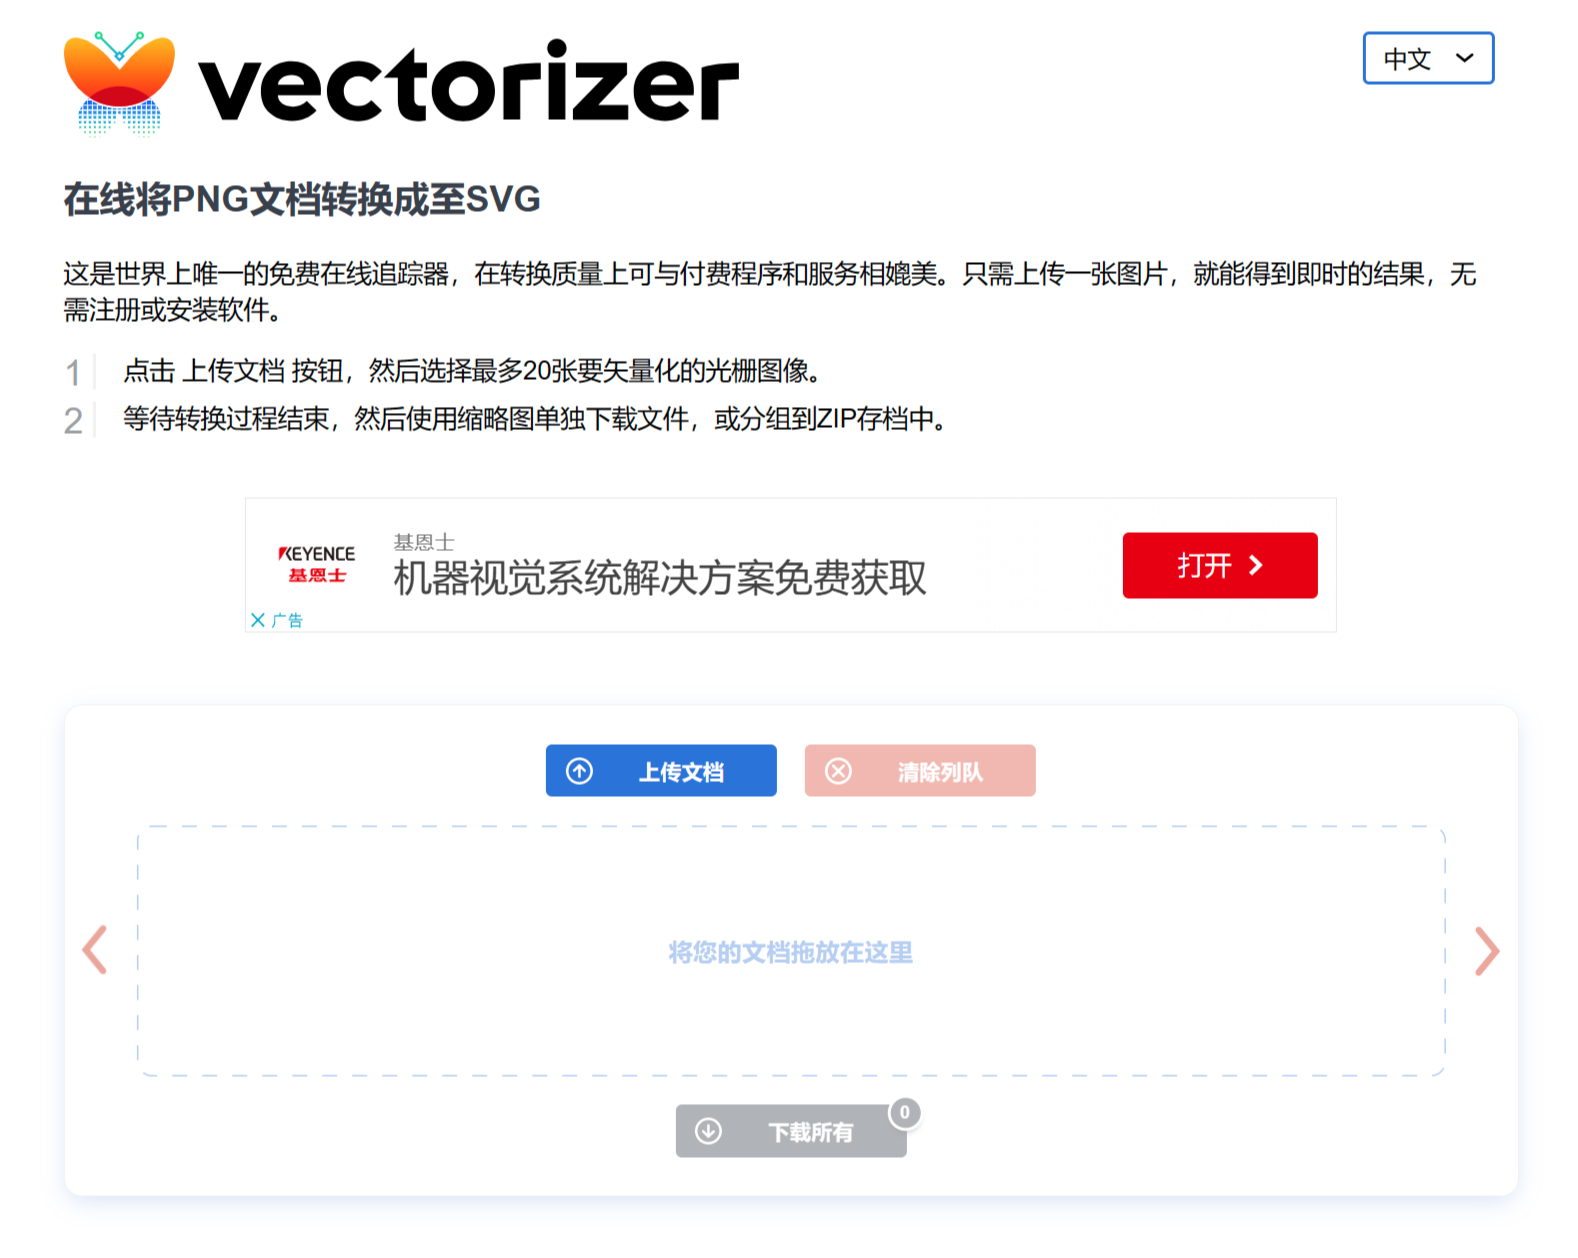 Vectorizer – 免费图像矢量化 - vectorizer.com.png